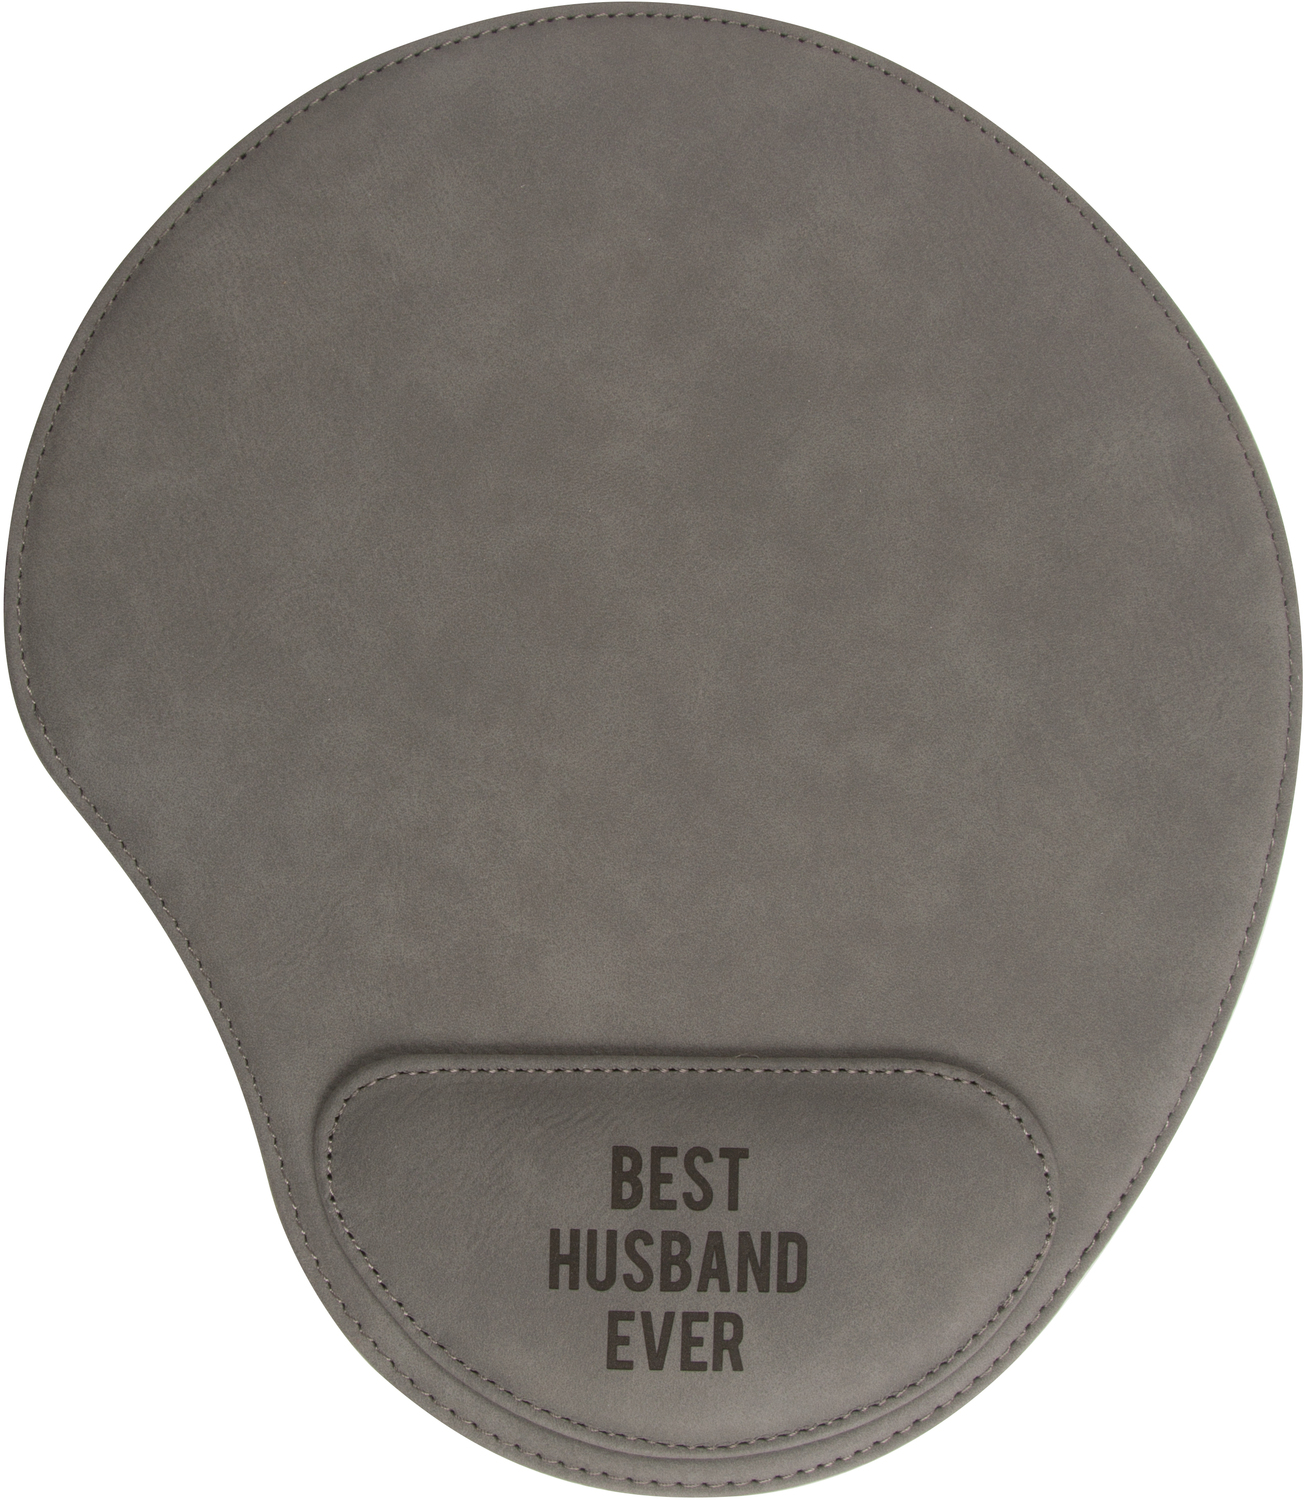 Husband by Man Made - Husband - Cushioned Mousepad